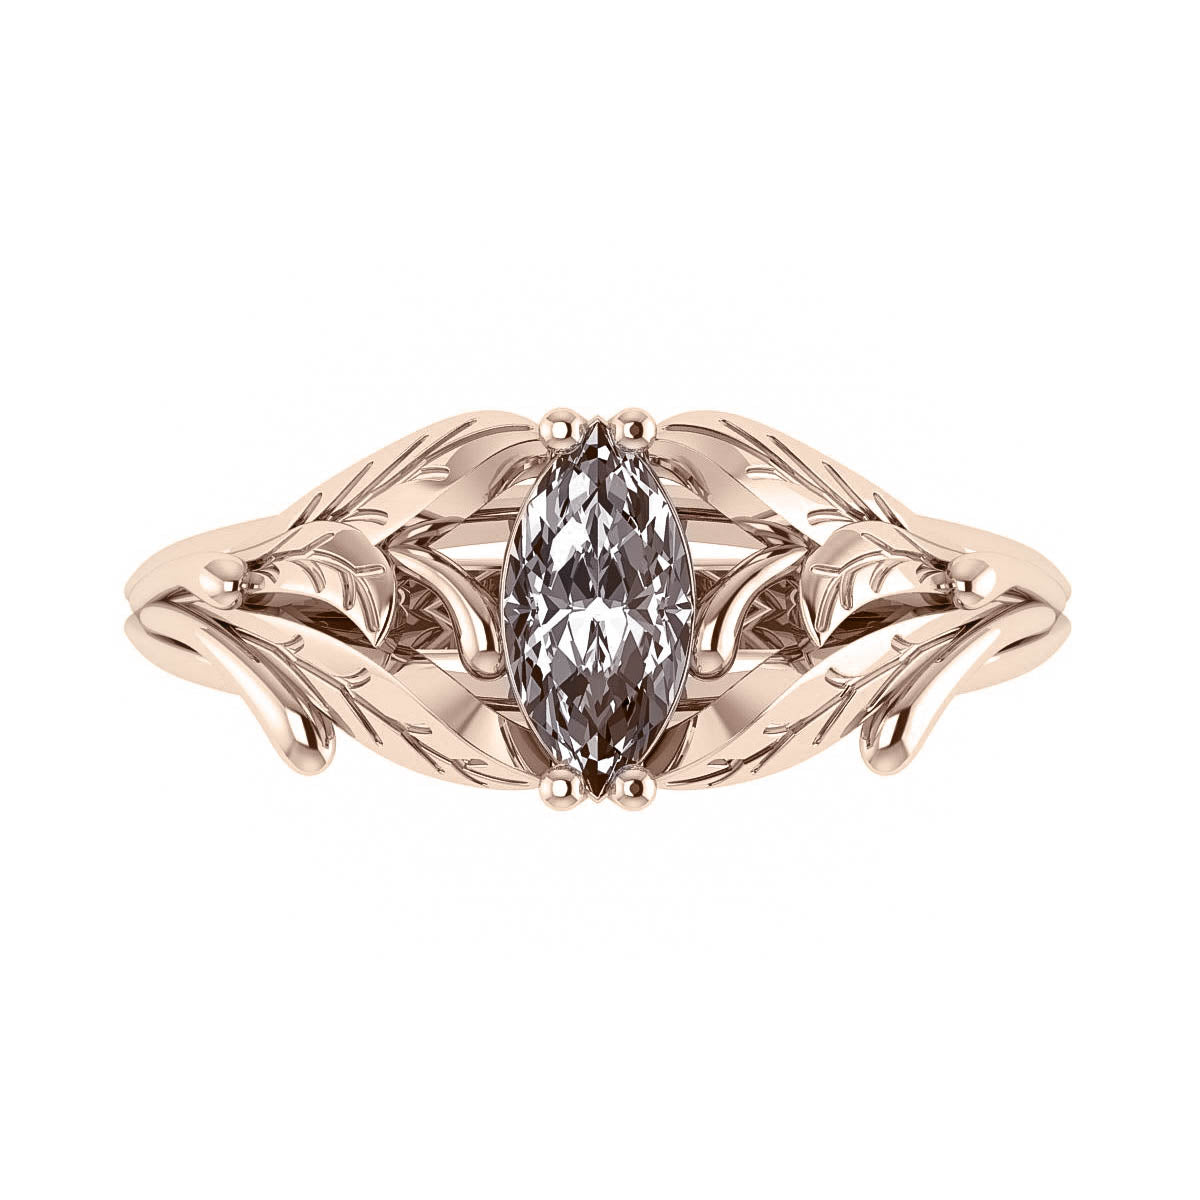 Wisteria | marquise cut 8x4 mm gemstone setting for custom ring - Eden Garden Jewelry™